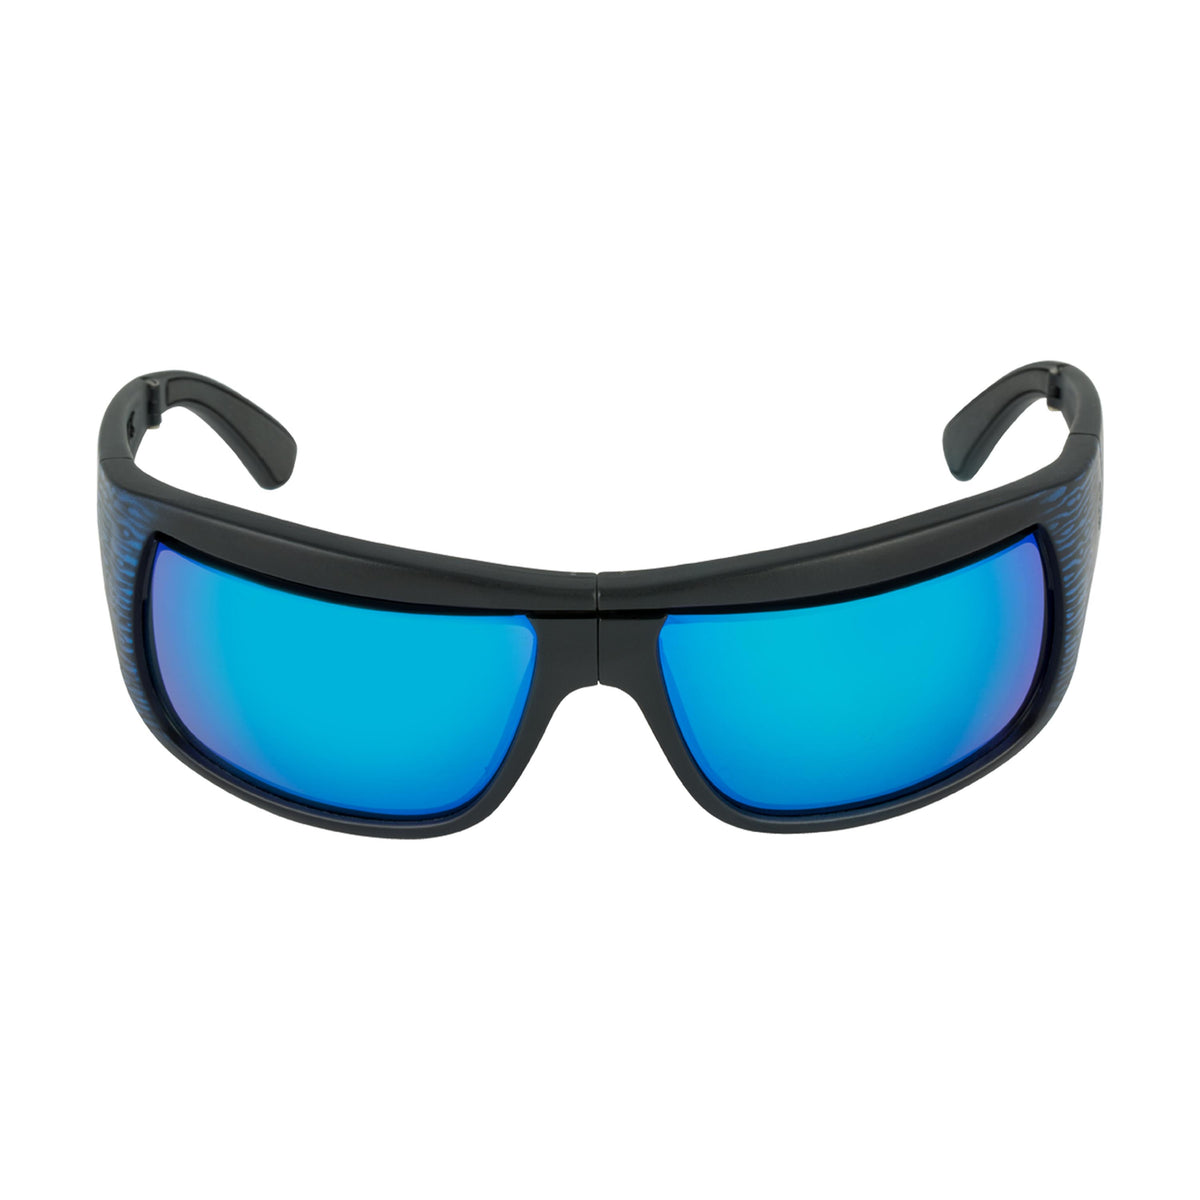 Popticals, Premium Compact Sunglasses, PopH2O, 010070-EUUN, Polarized Sunglasses, Matte Blue/Black Wood Frame, Gray Lenses w/Blue Mirror Finish, Front View